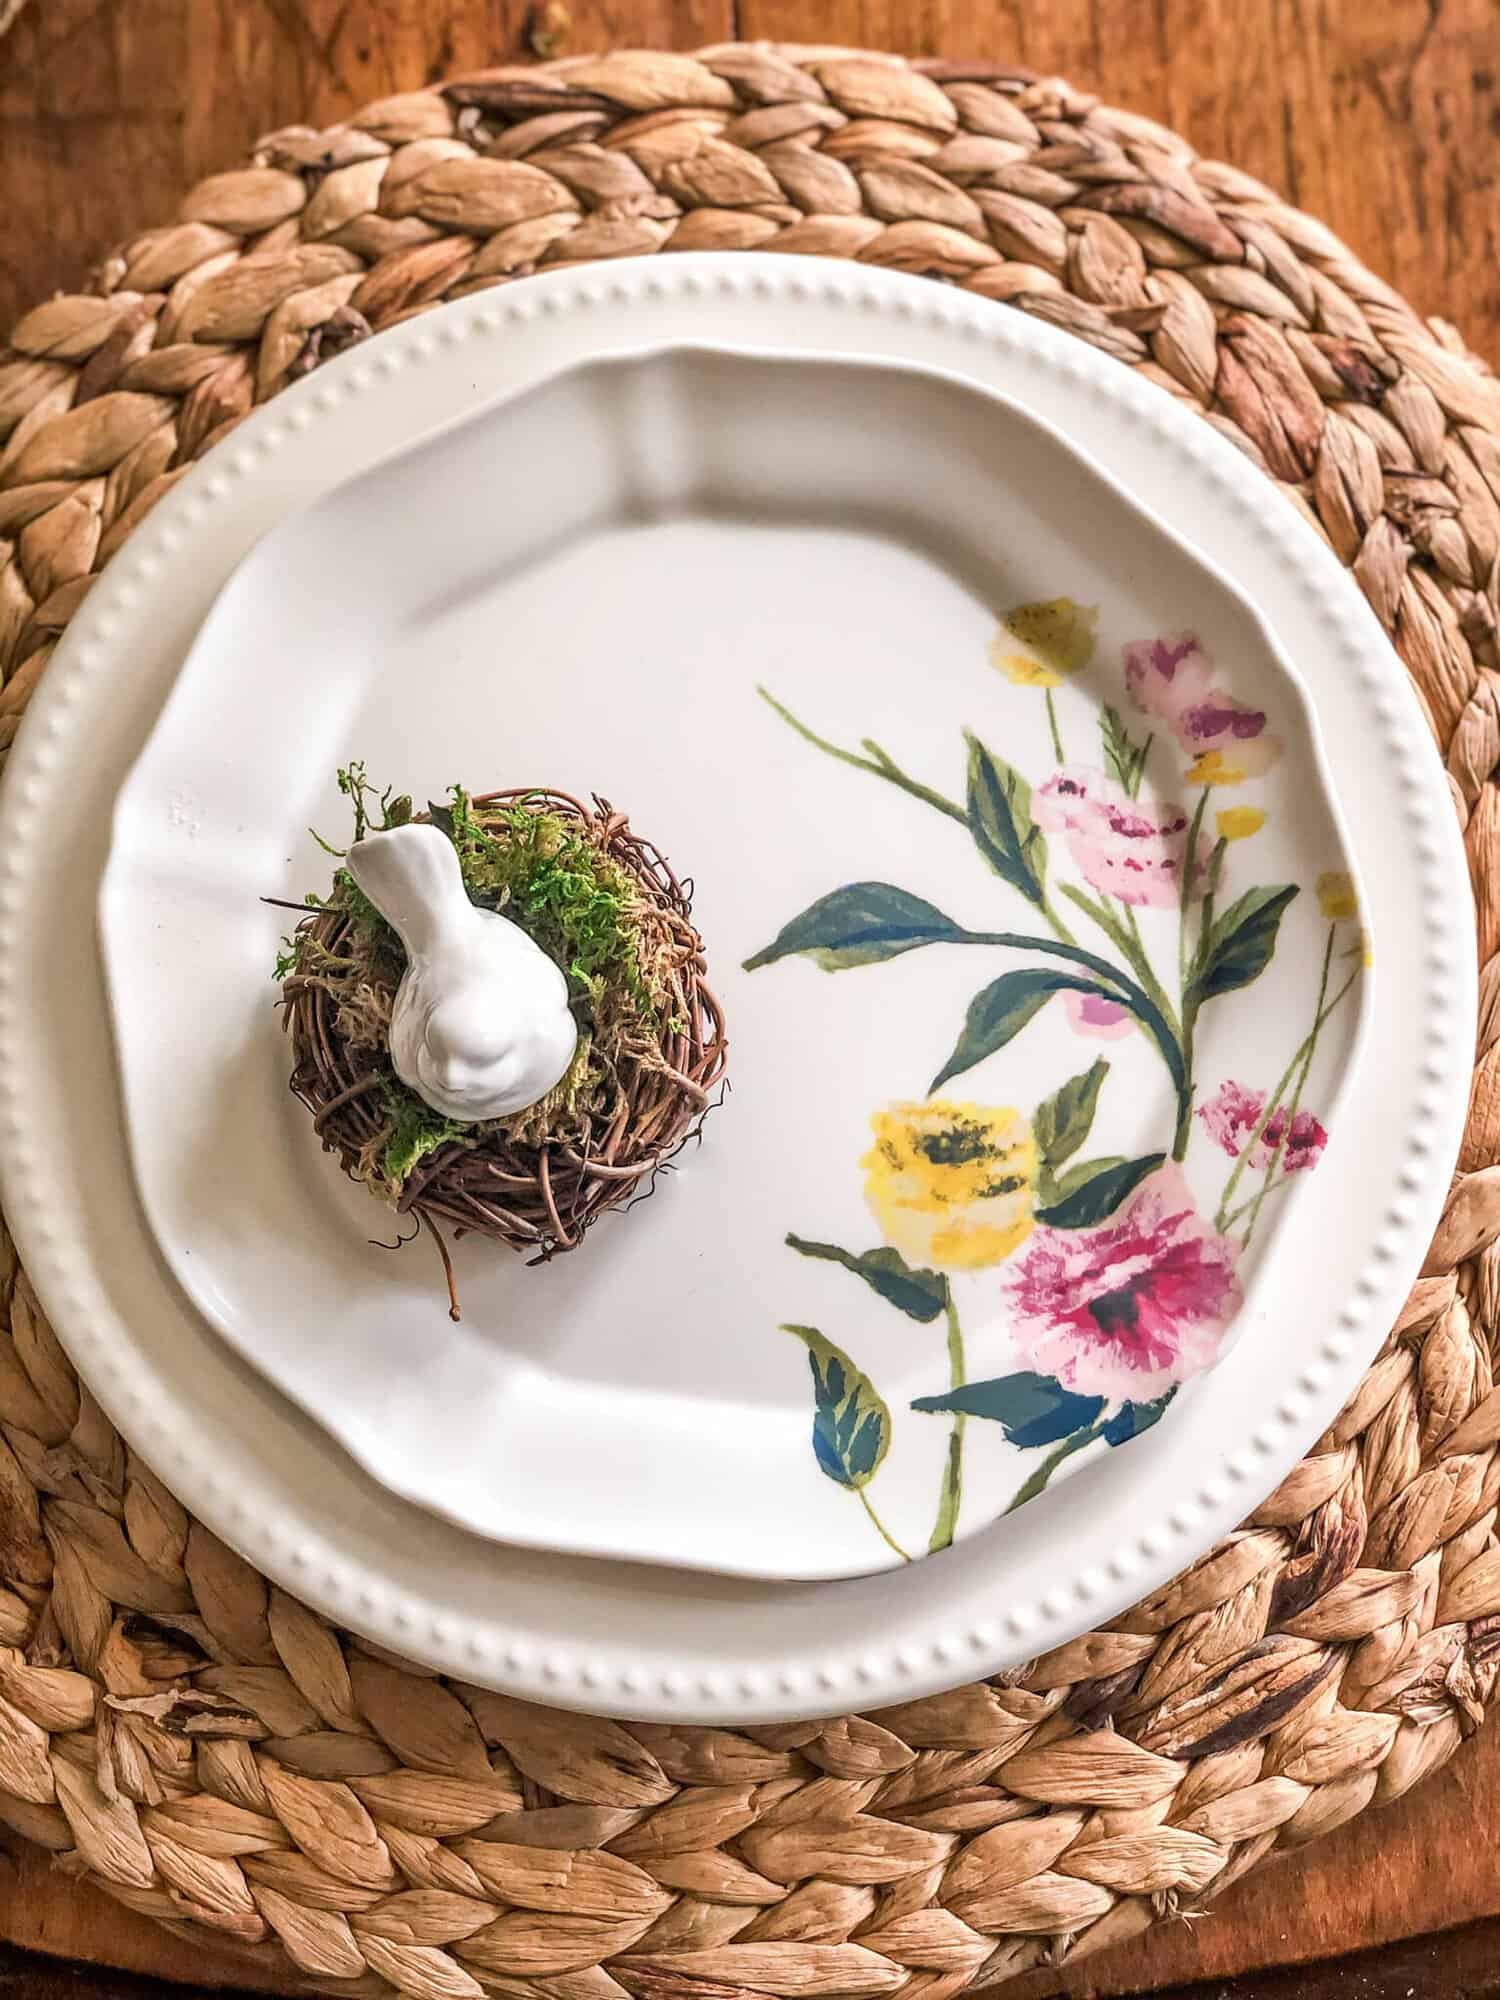 spring plate with diy bird's nest